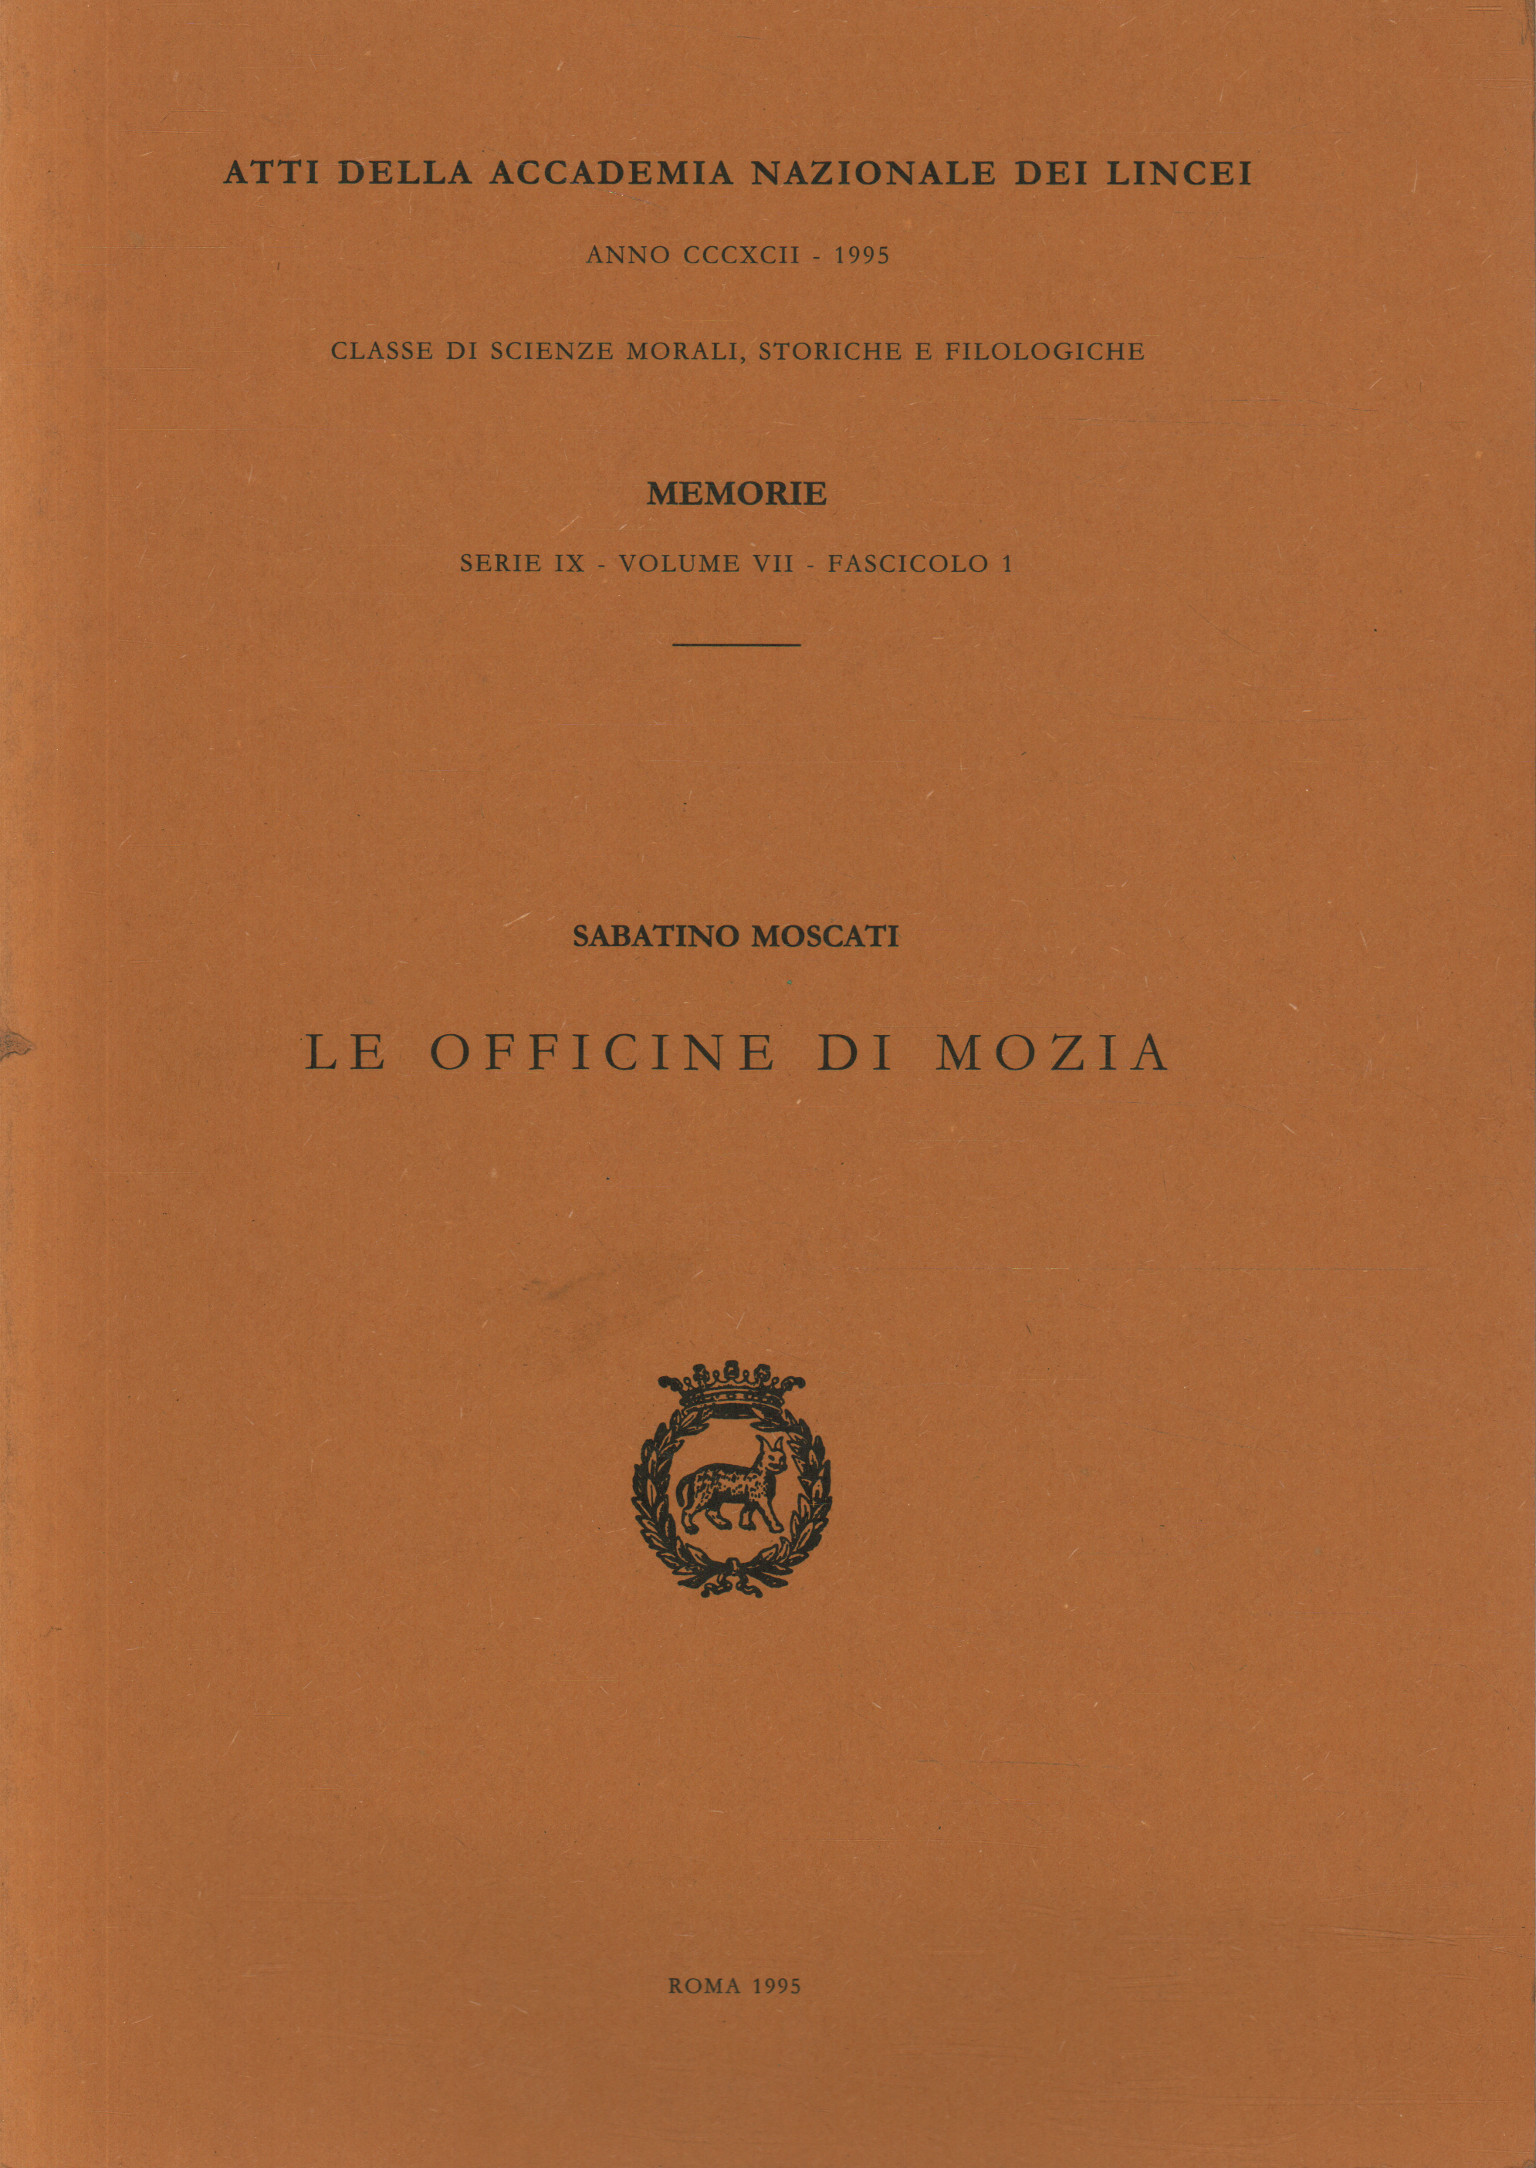 The Mozia workshops